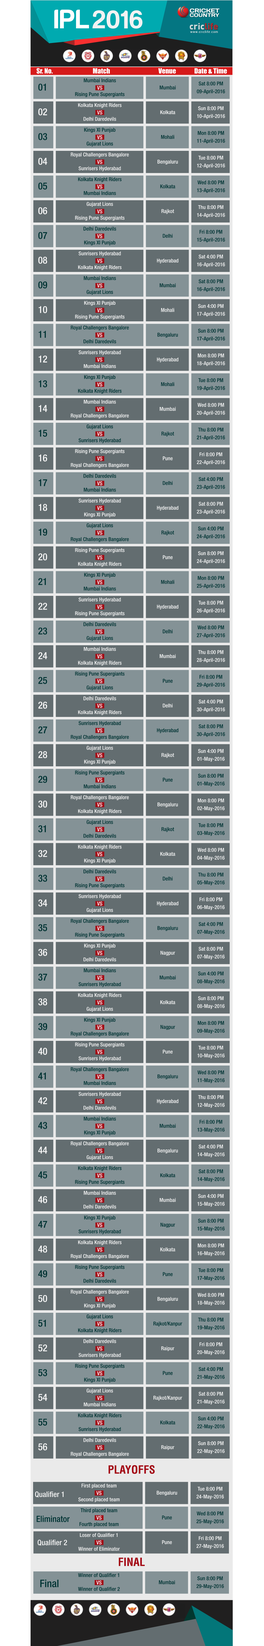 Iplinfo-IPL Schedule2016